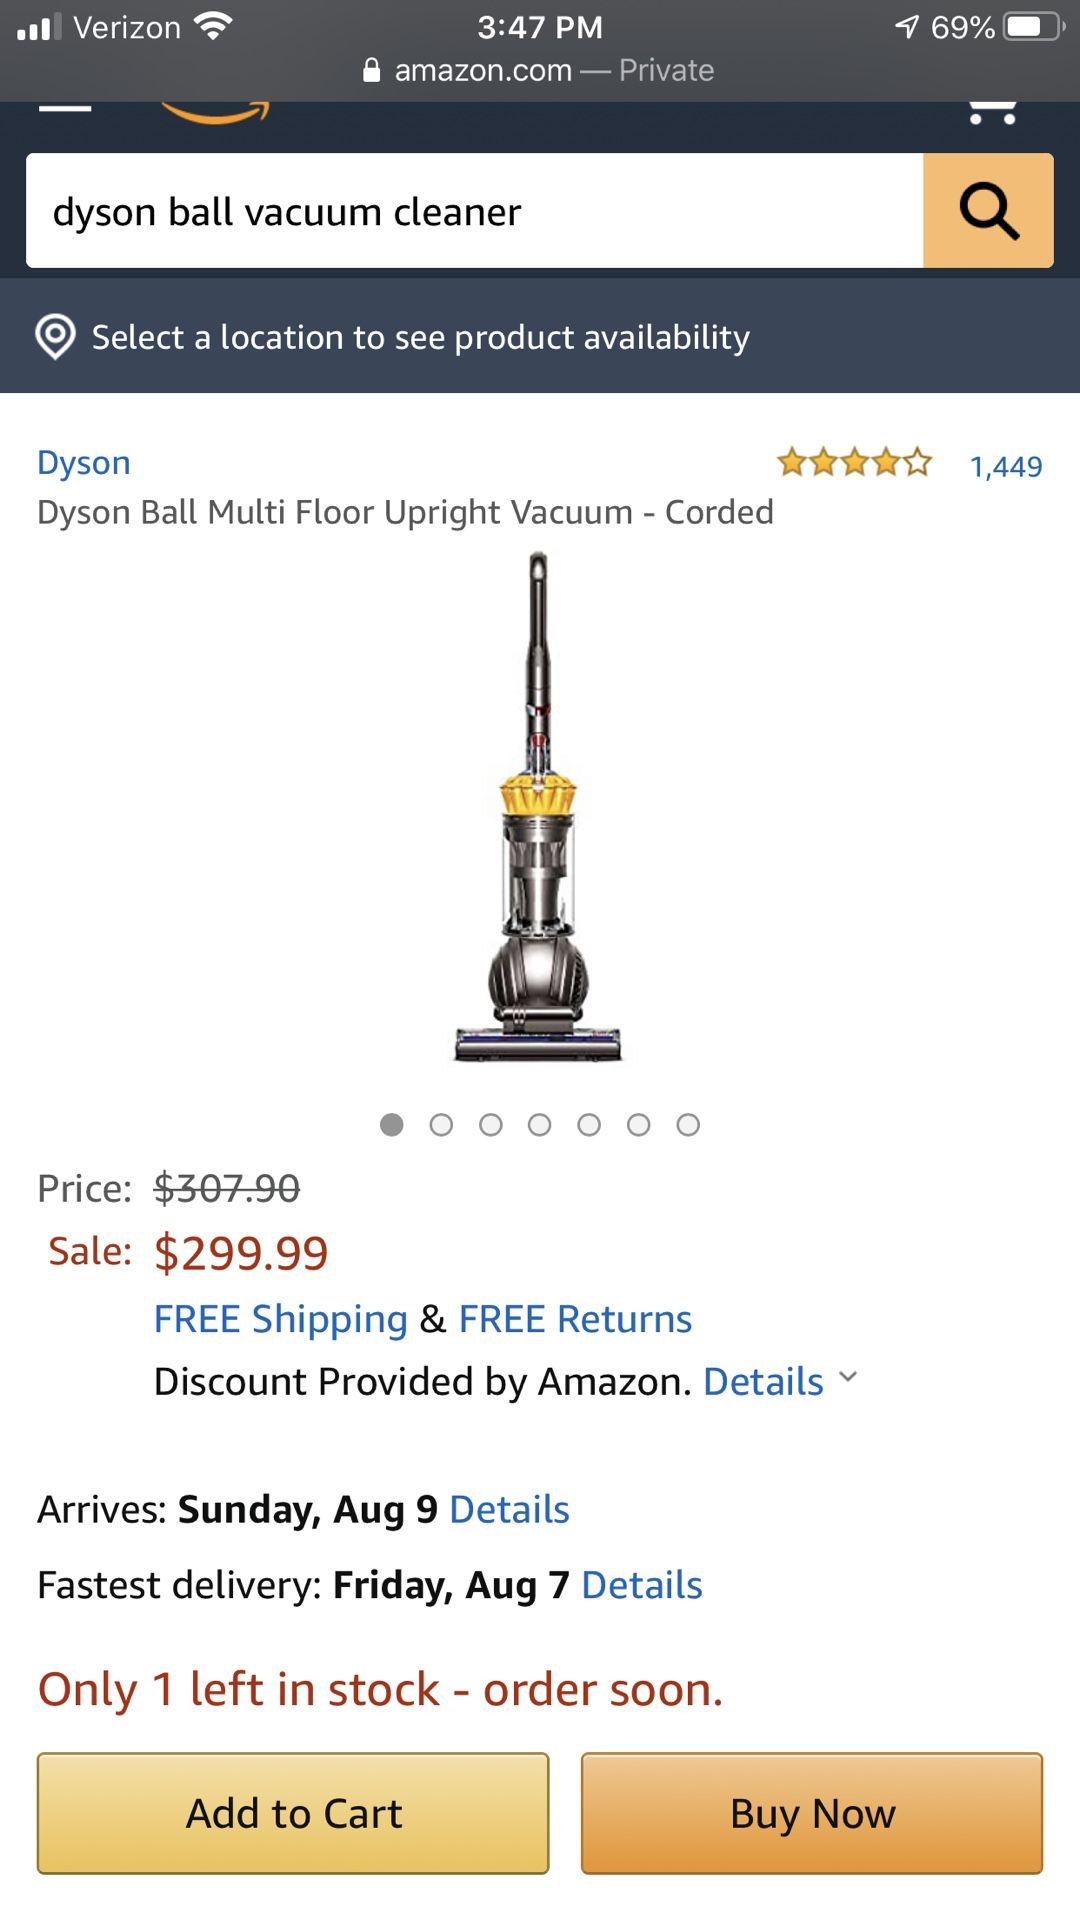 Dyson Ball Multi Floor Upright Vacuum - Corded